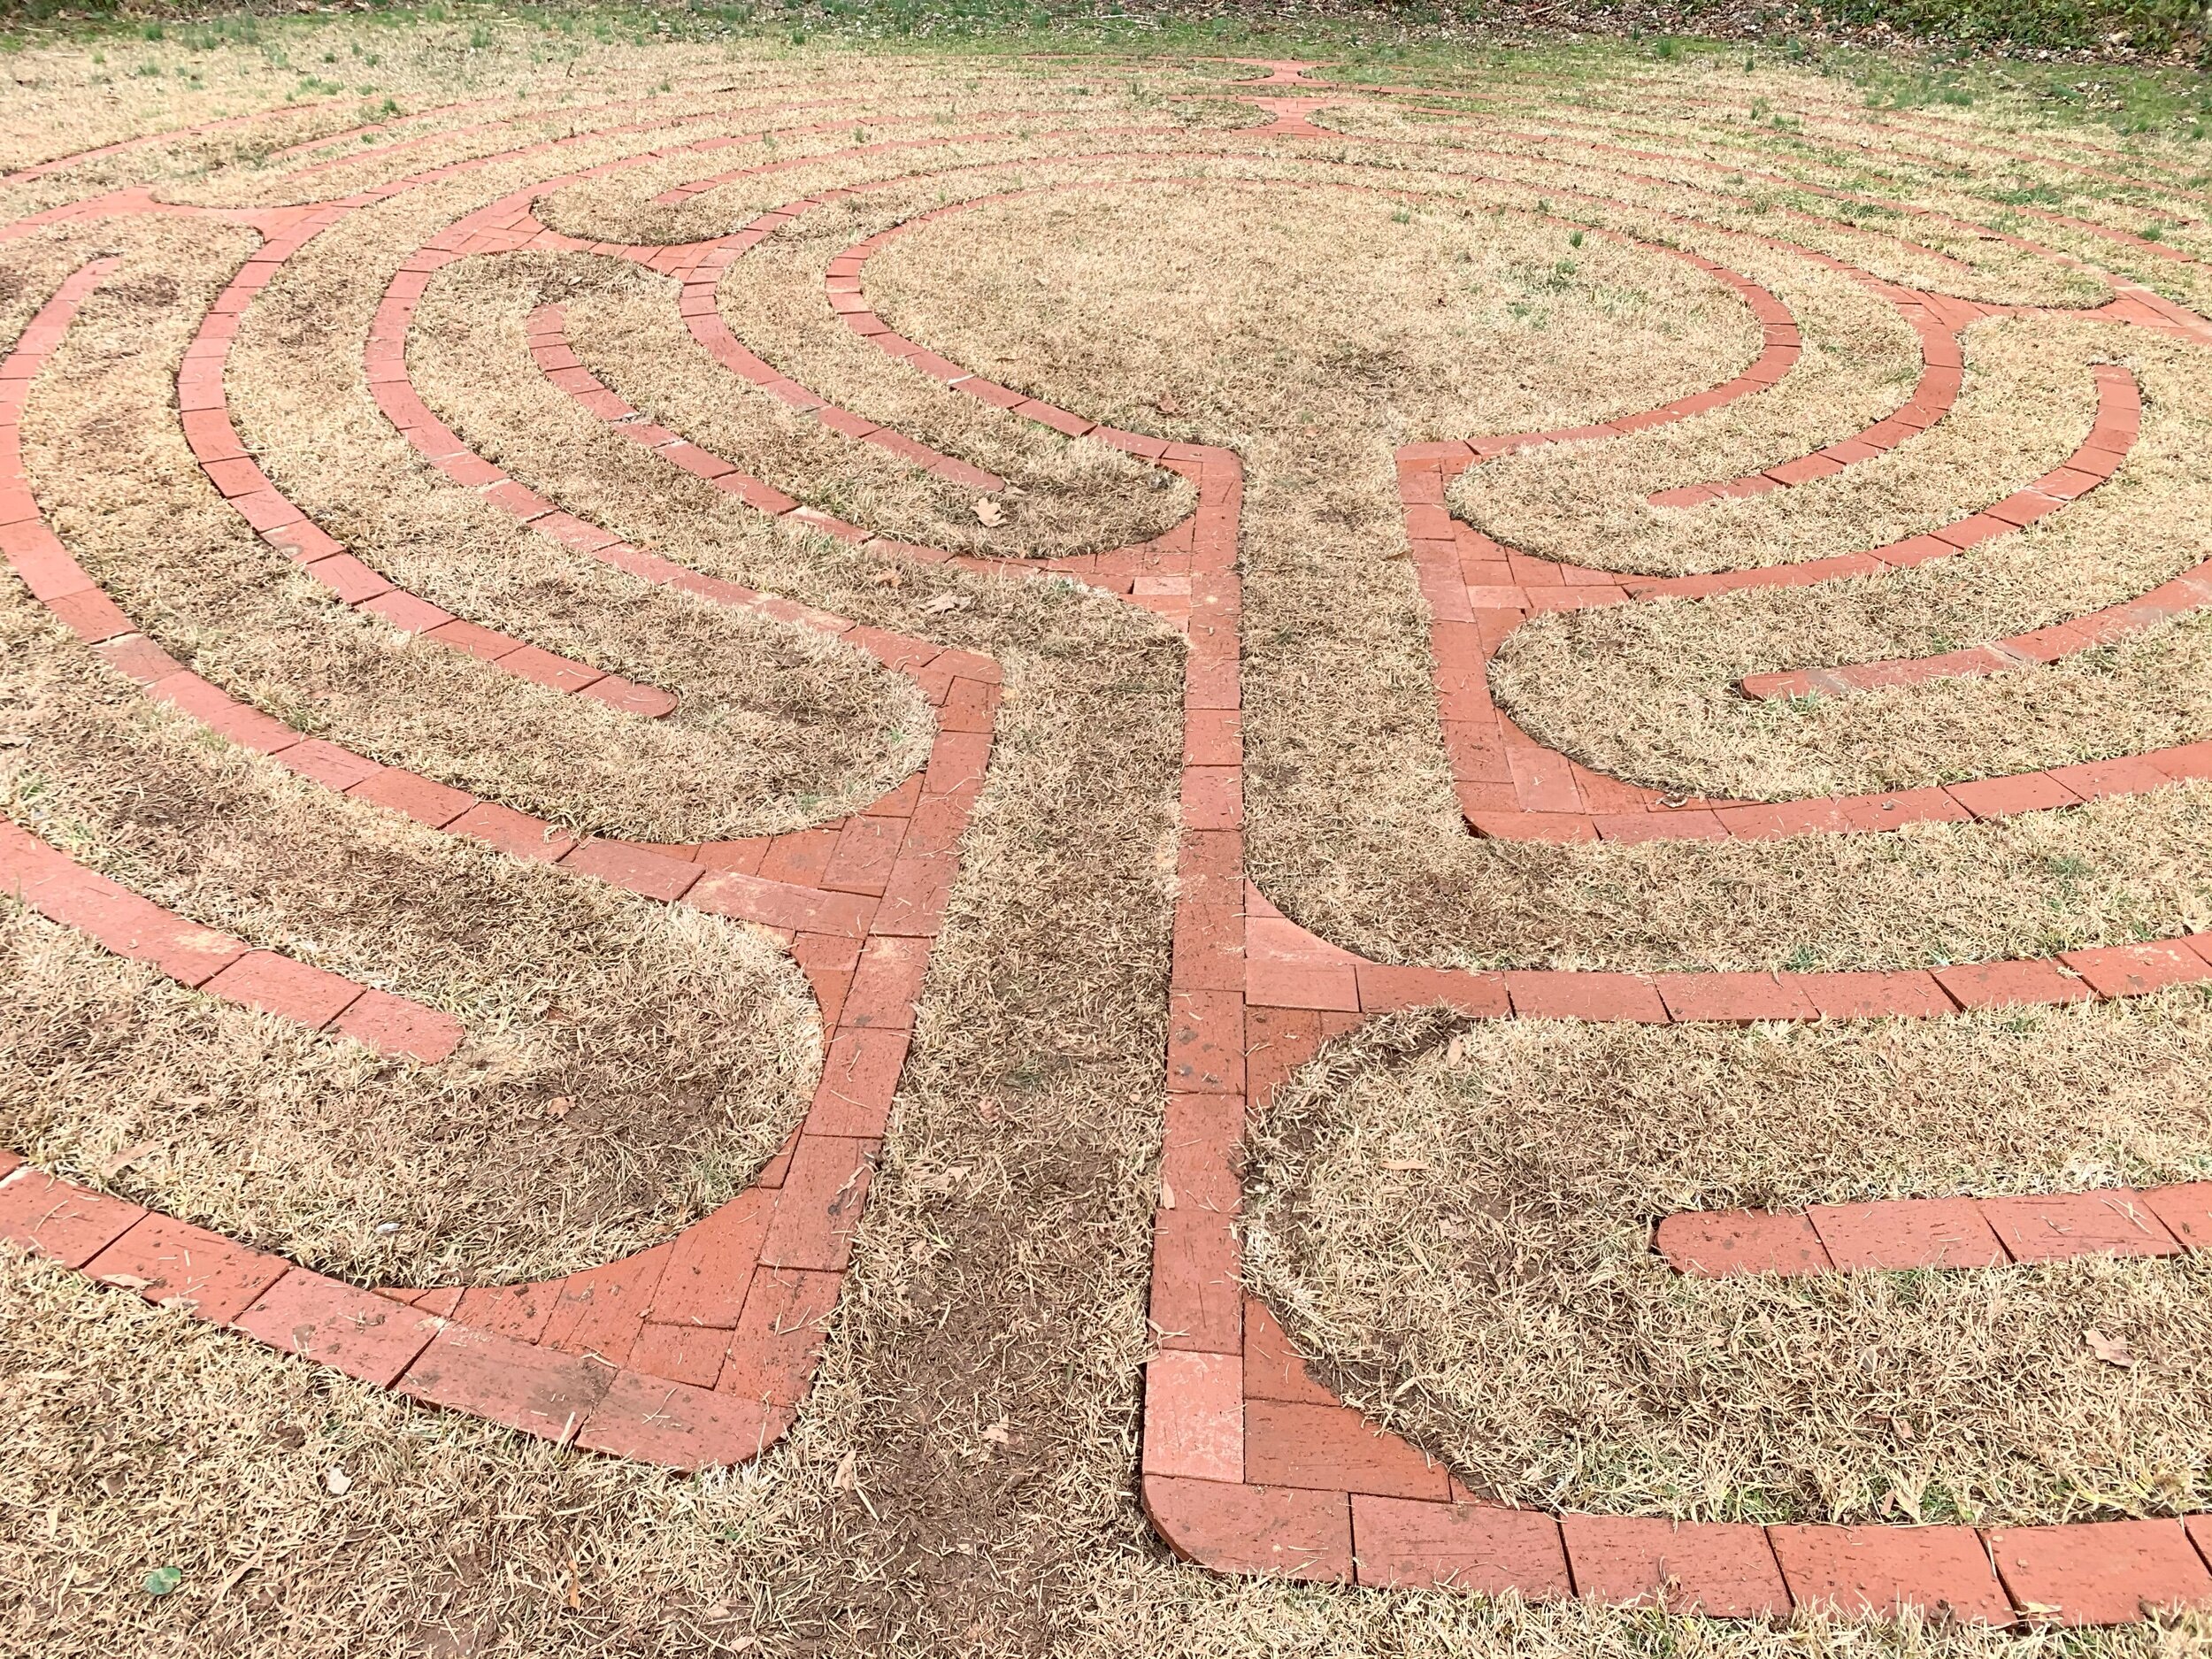 Labyrinth Installation at Christ Episcopal Church in Walnut Cove, NC